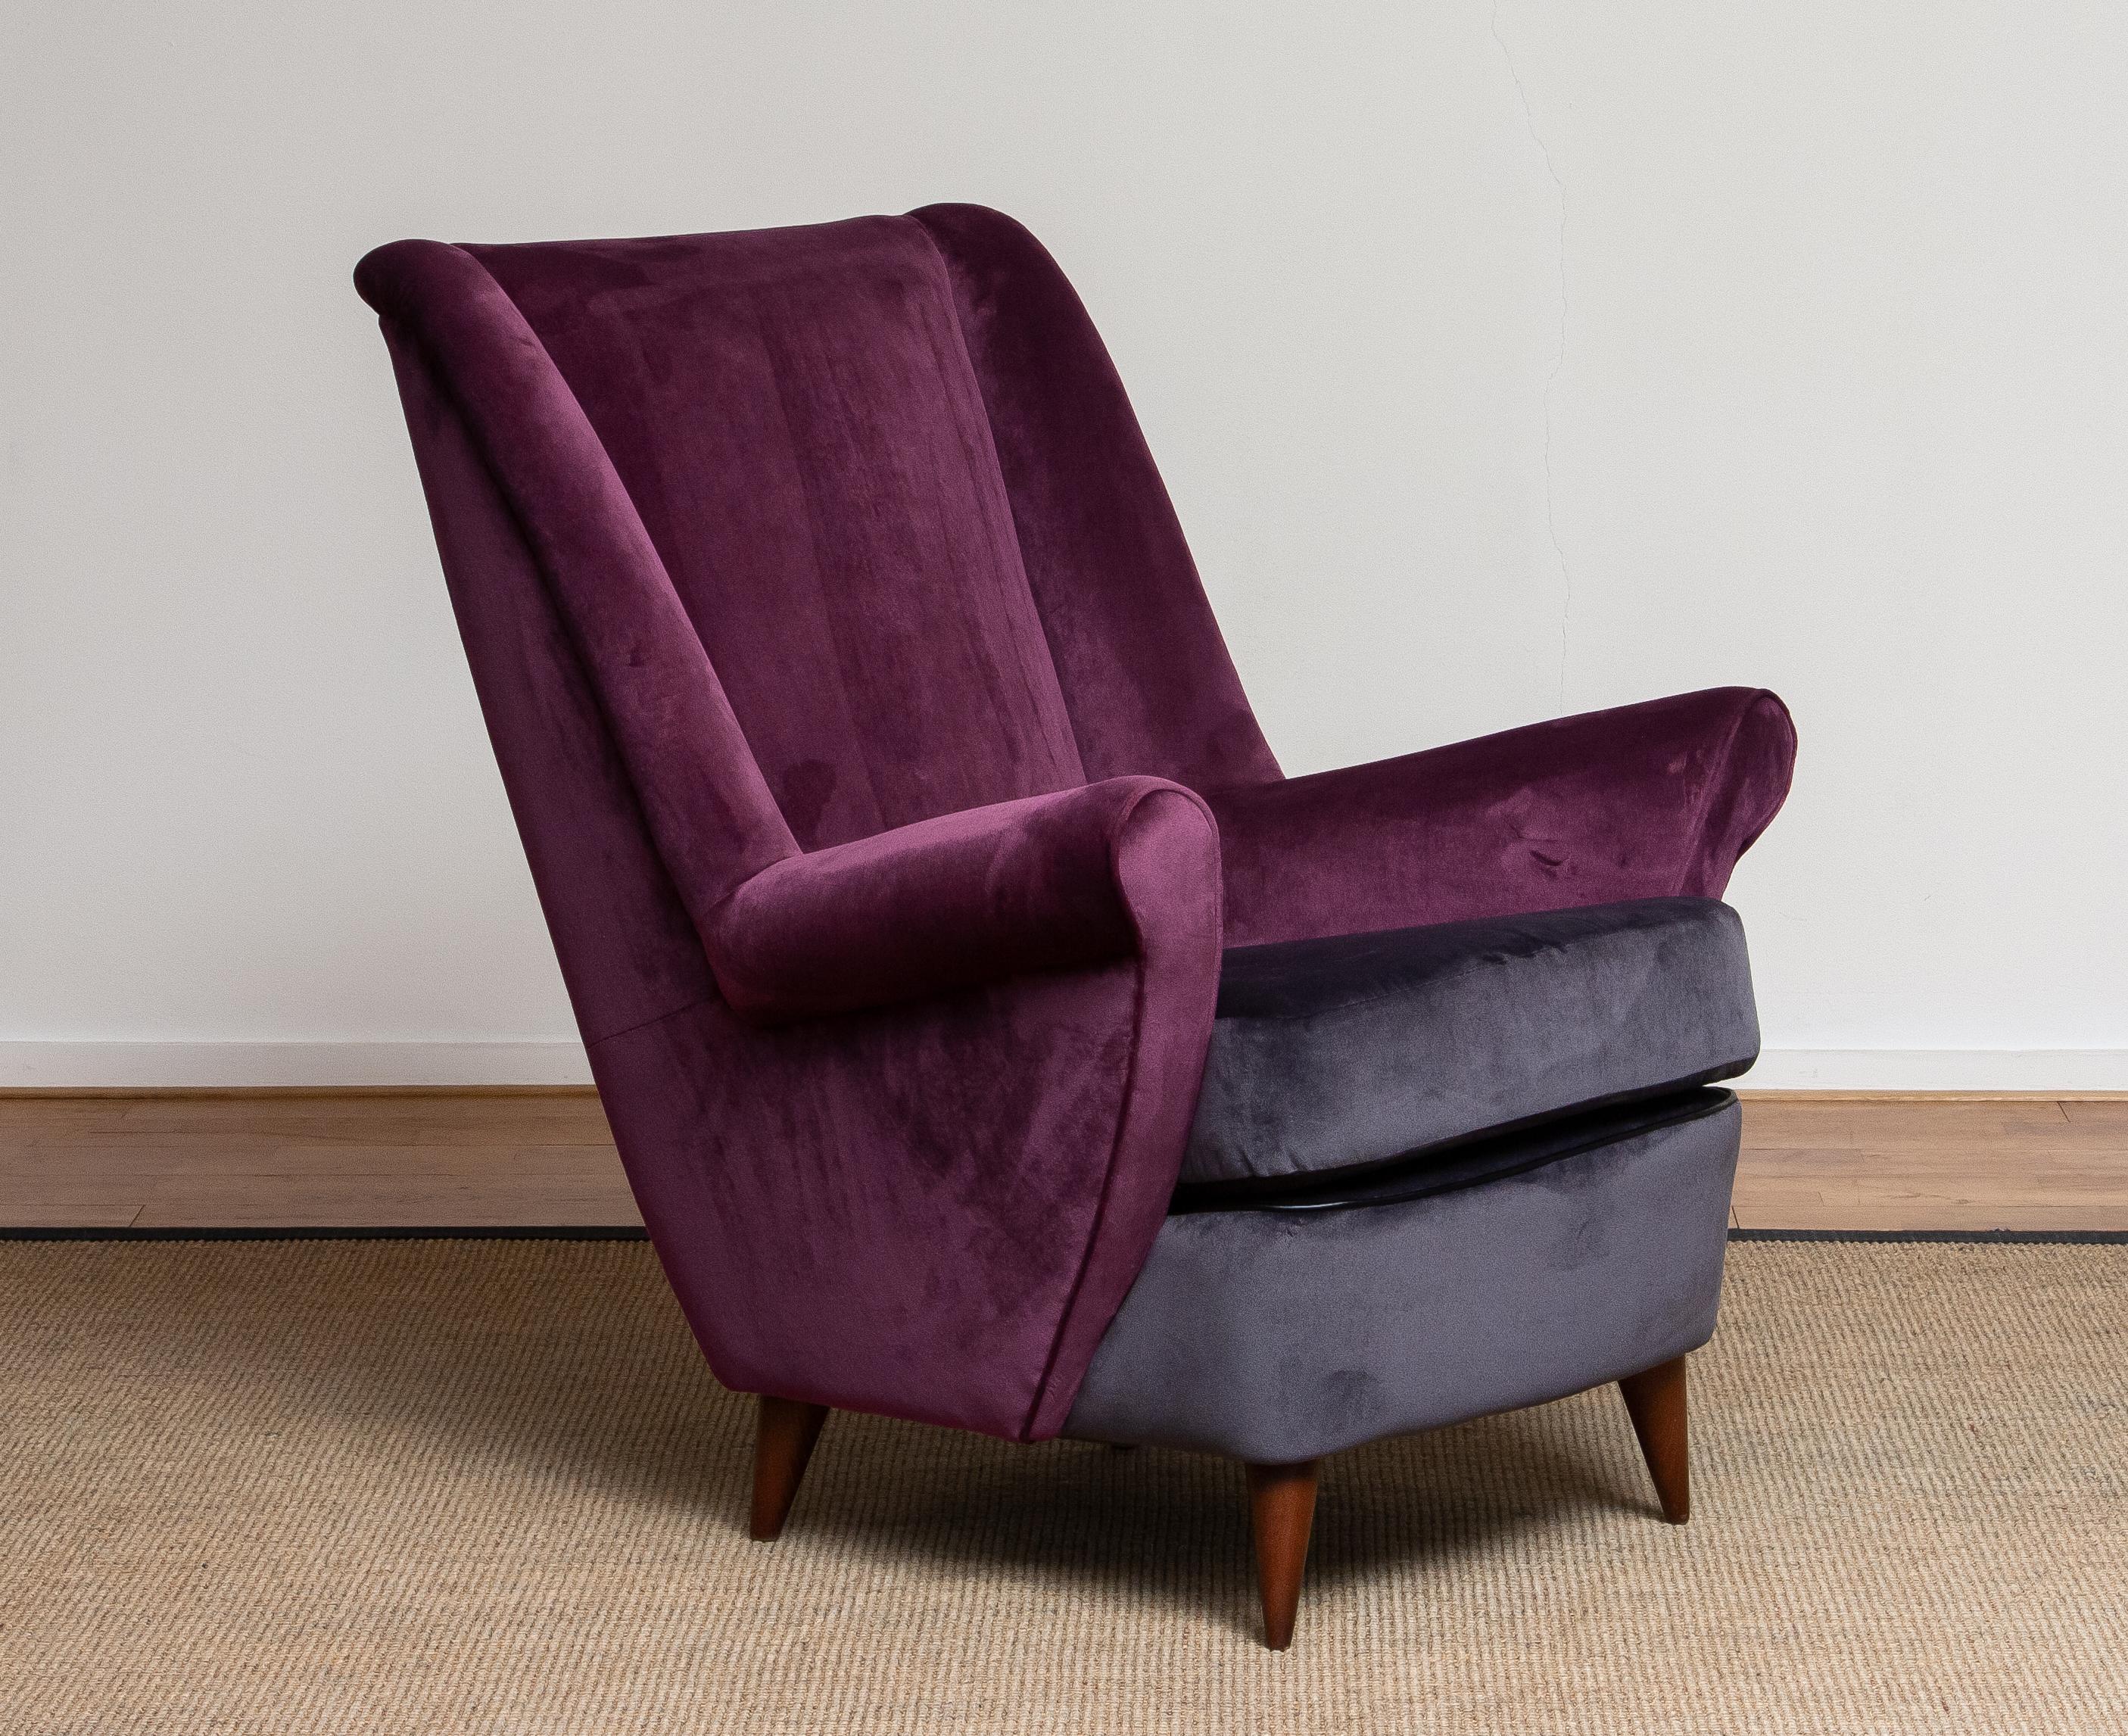 Italian 50's Lounge / Easy Chair in Magenta by Designed Gio Ponti for ISA Bergamo, Italy